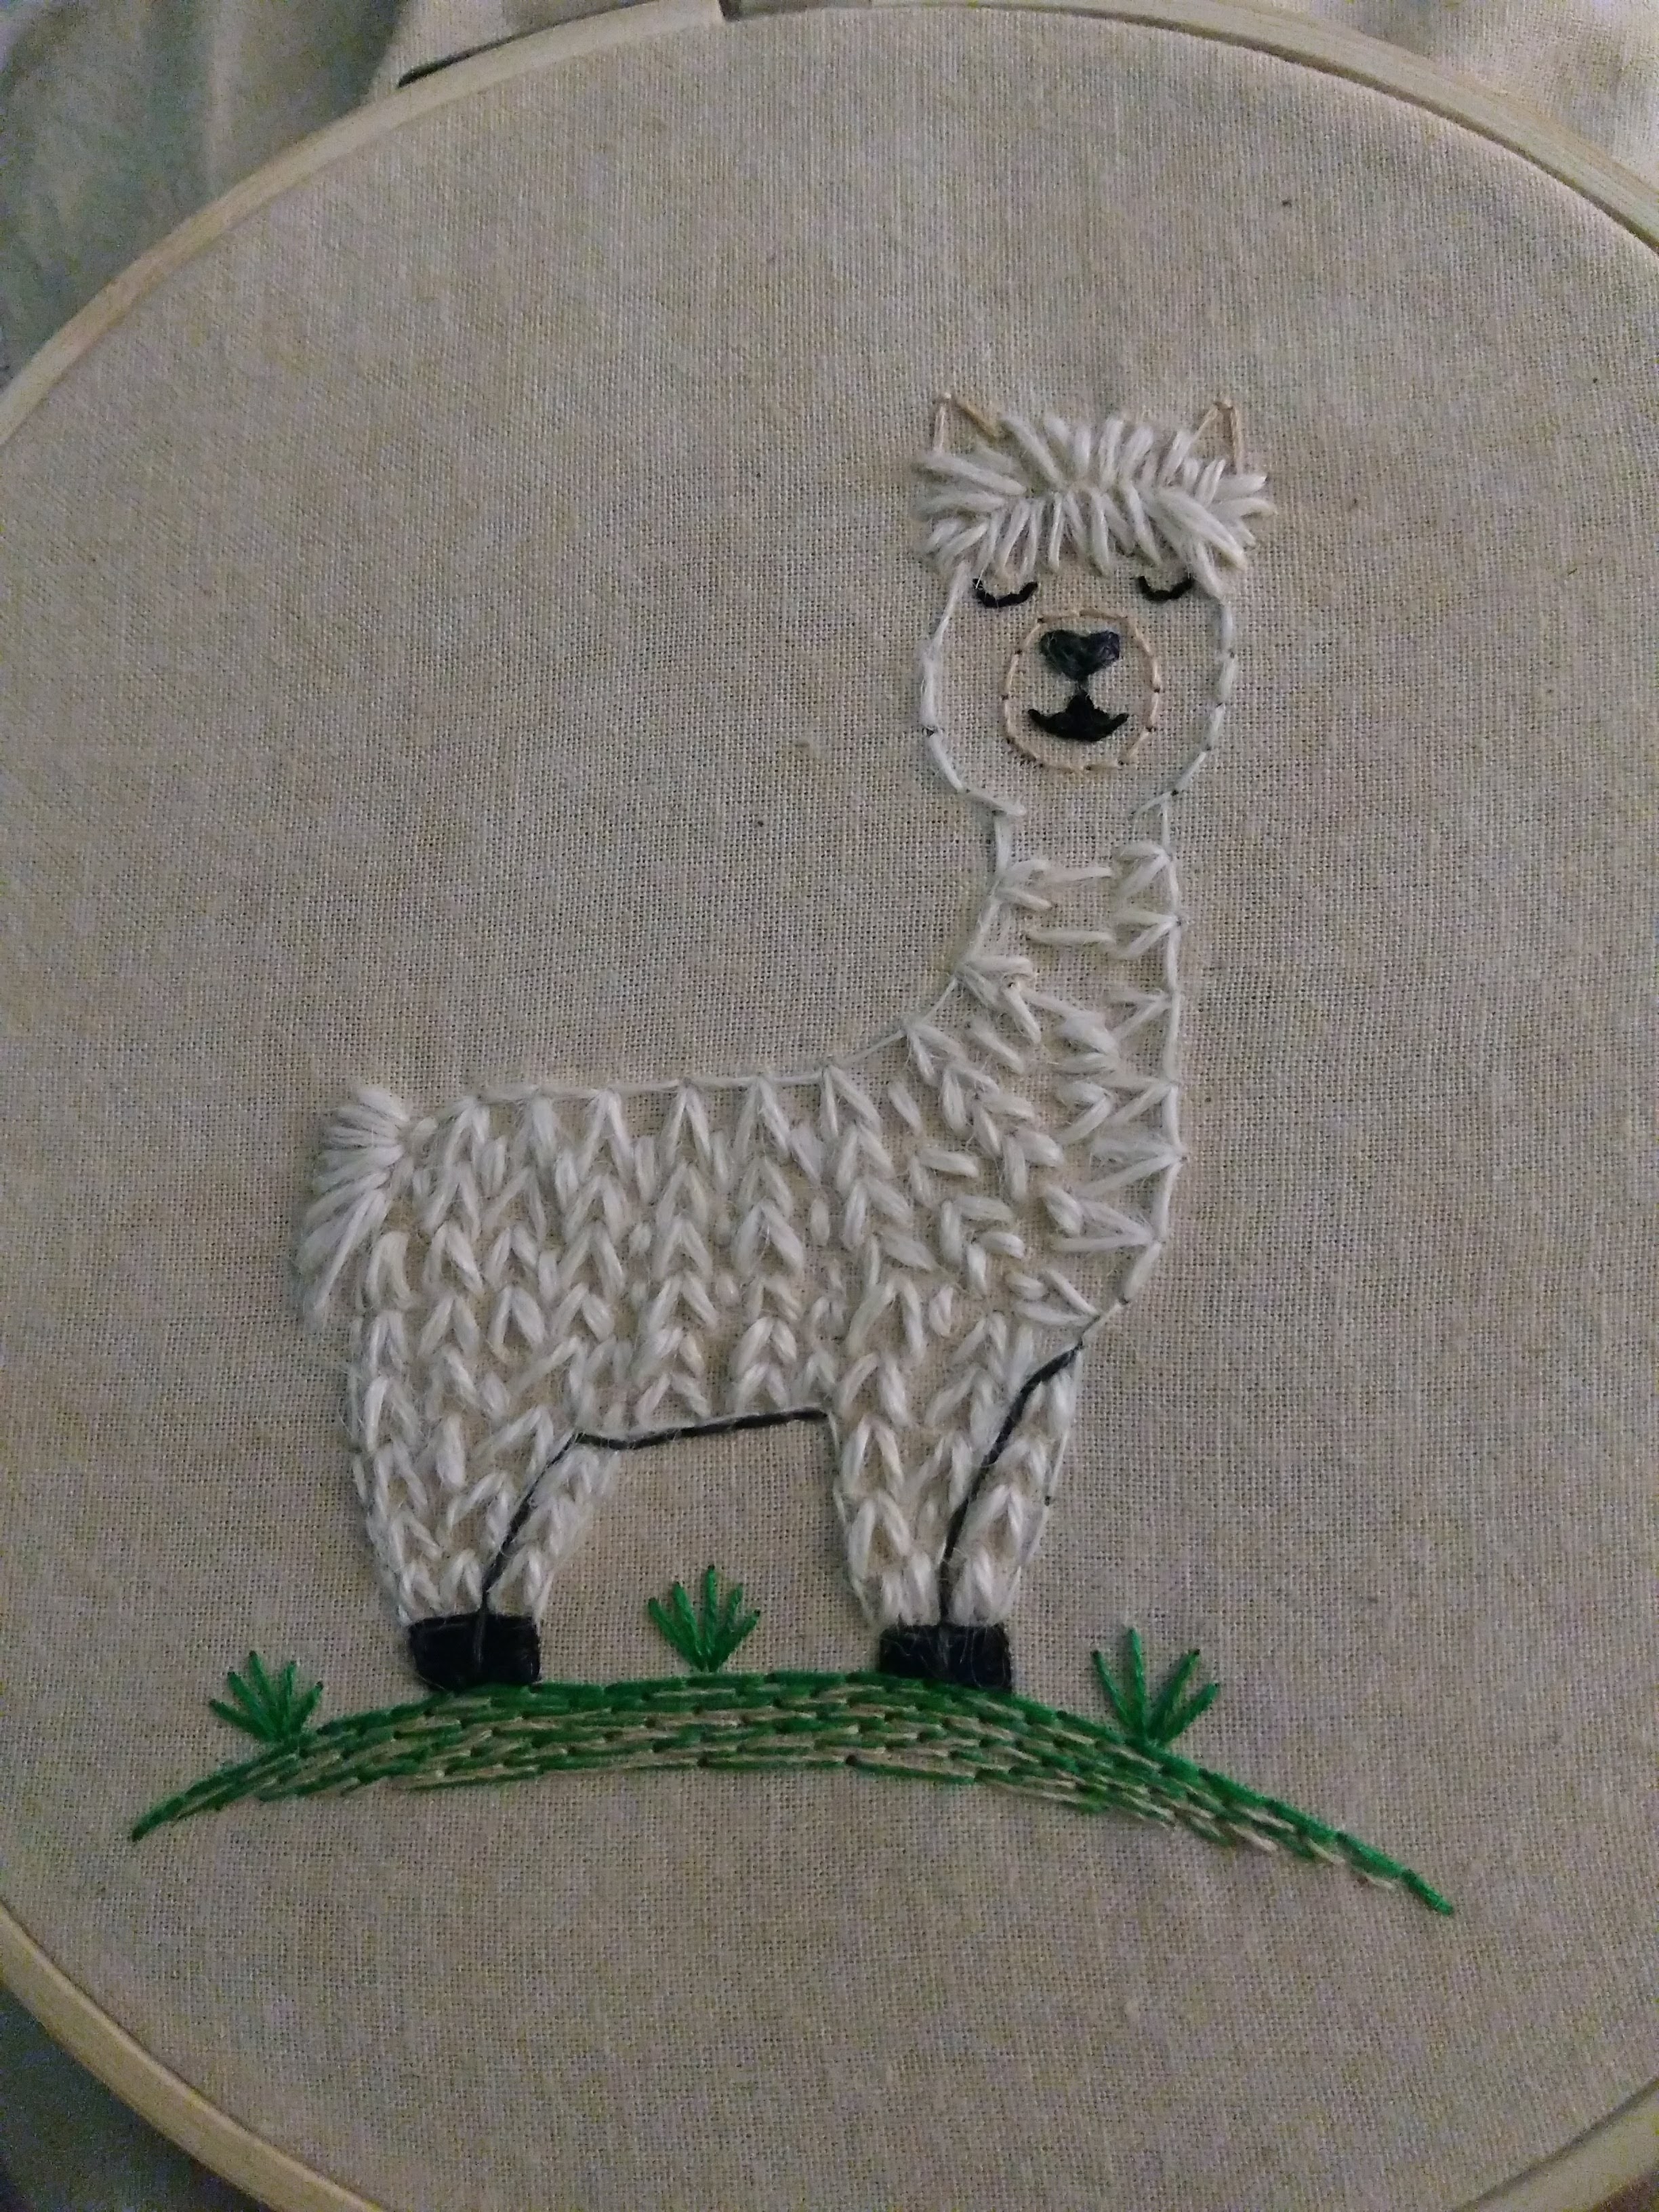 Needlework of an alpaca